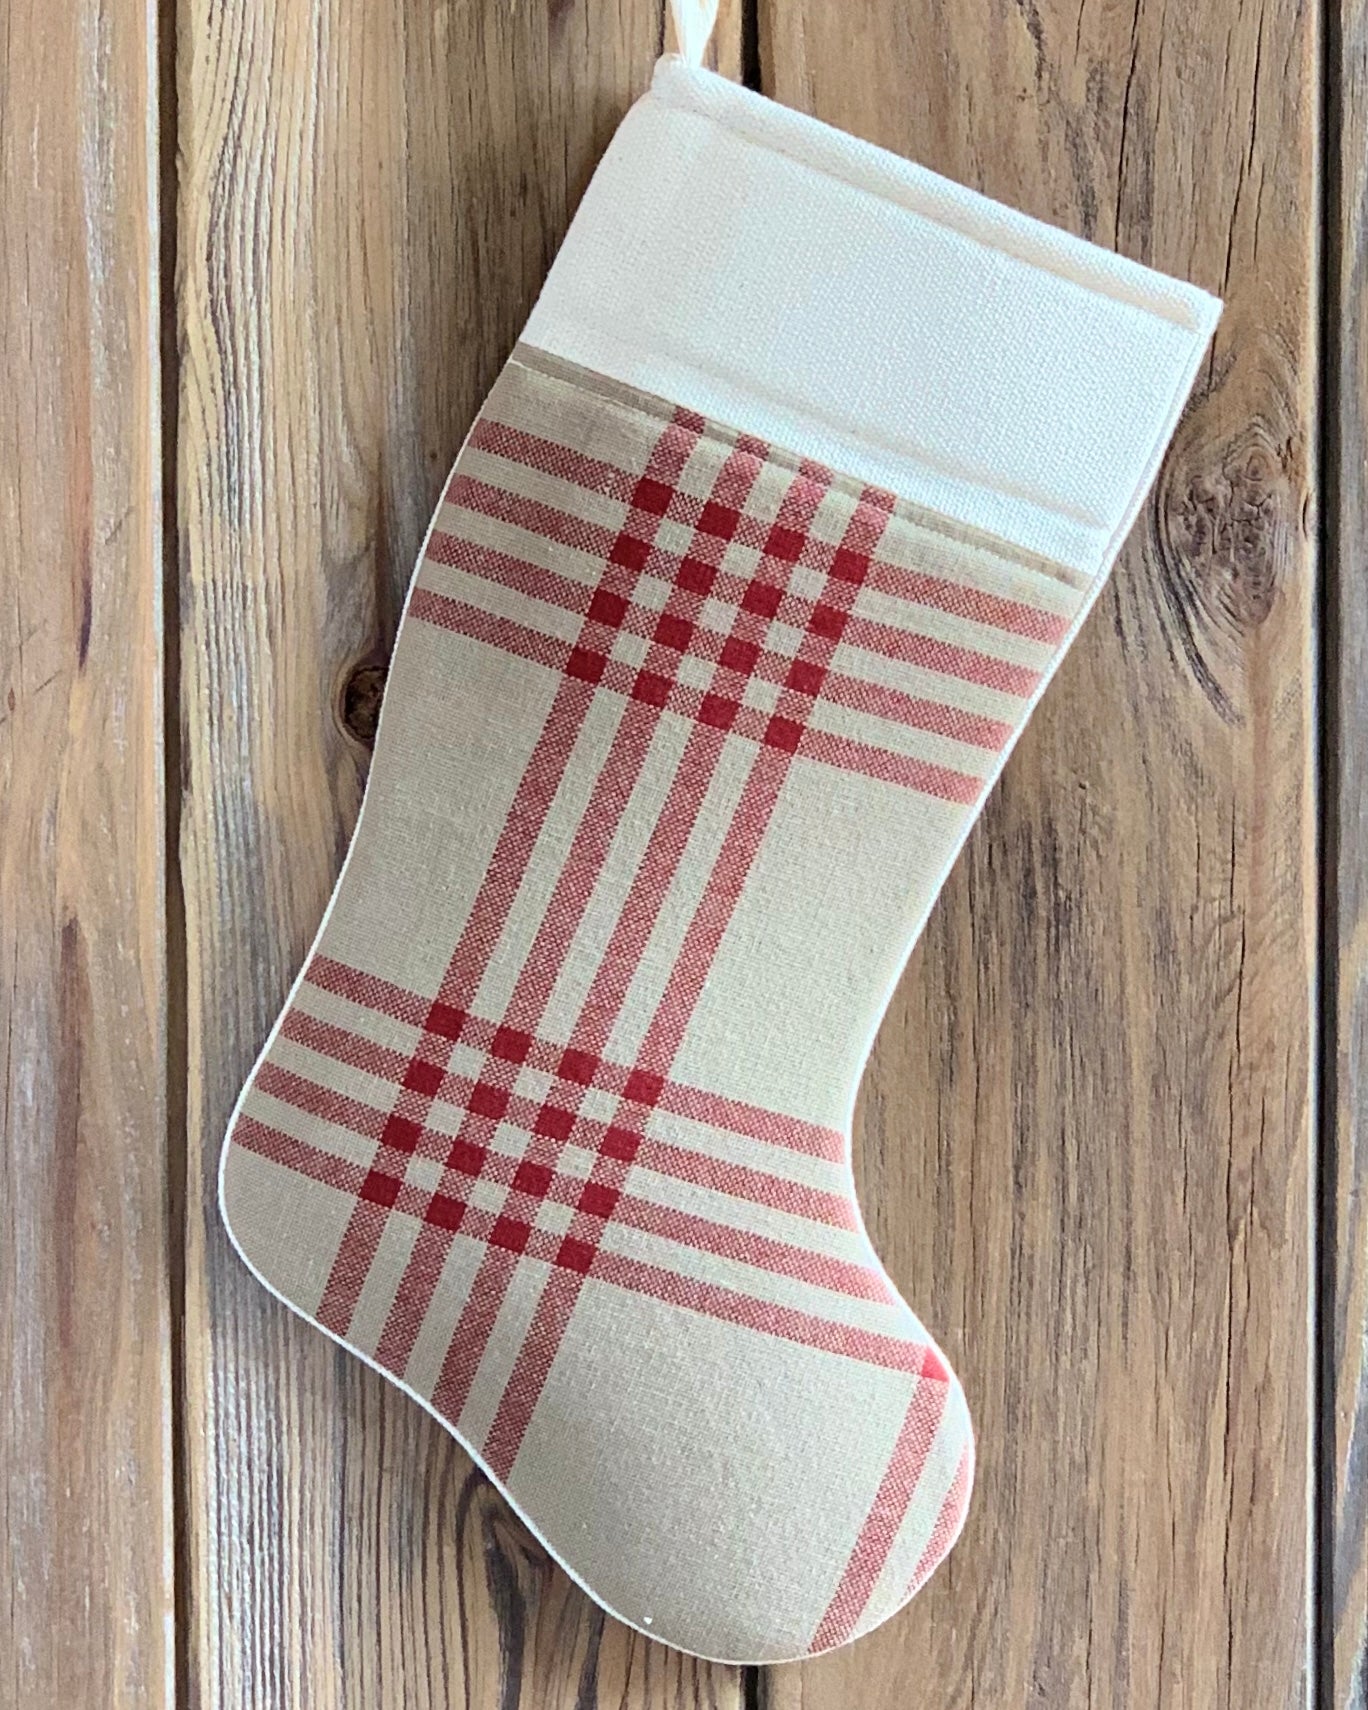 Grain Sack Christmas Stockings - Black, Mustard Stripe and Red Plaid